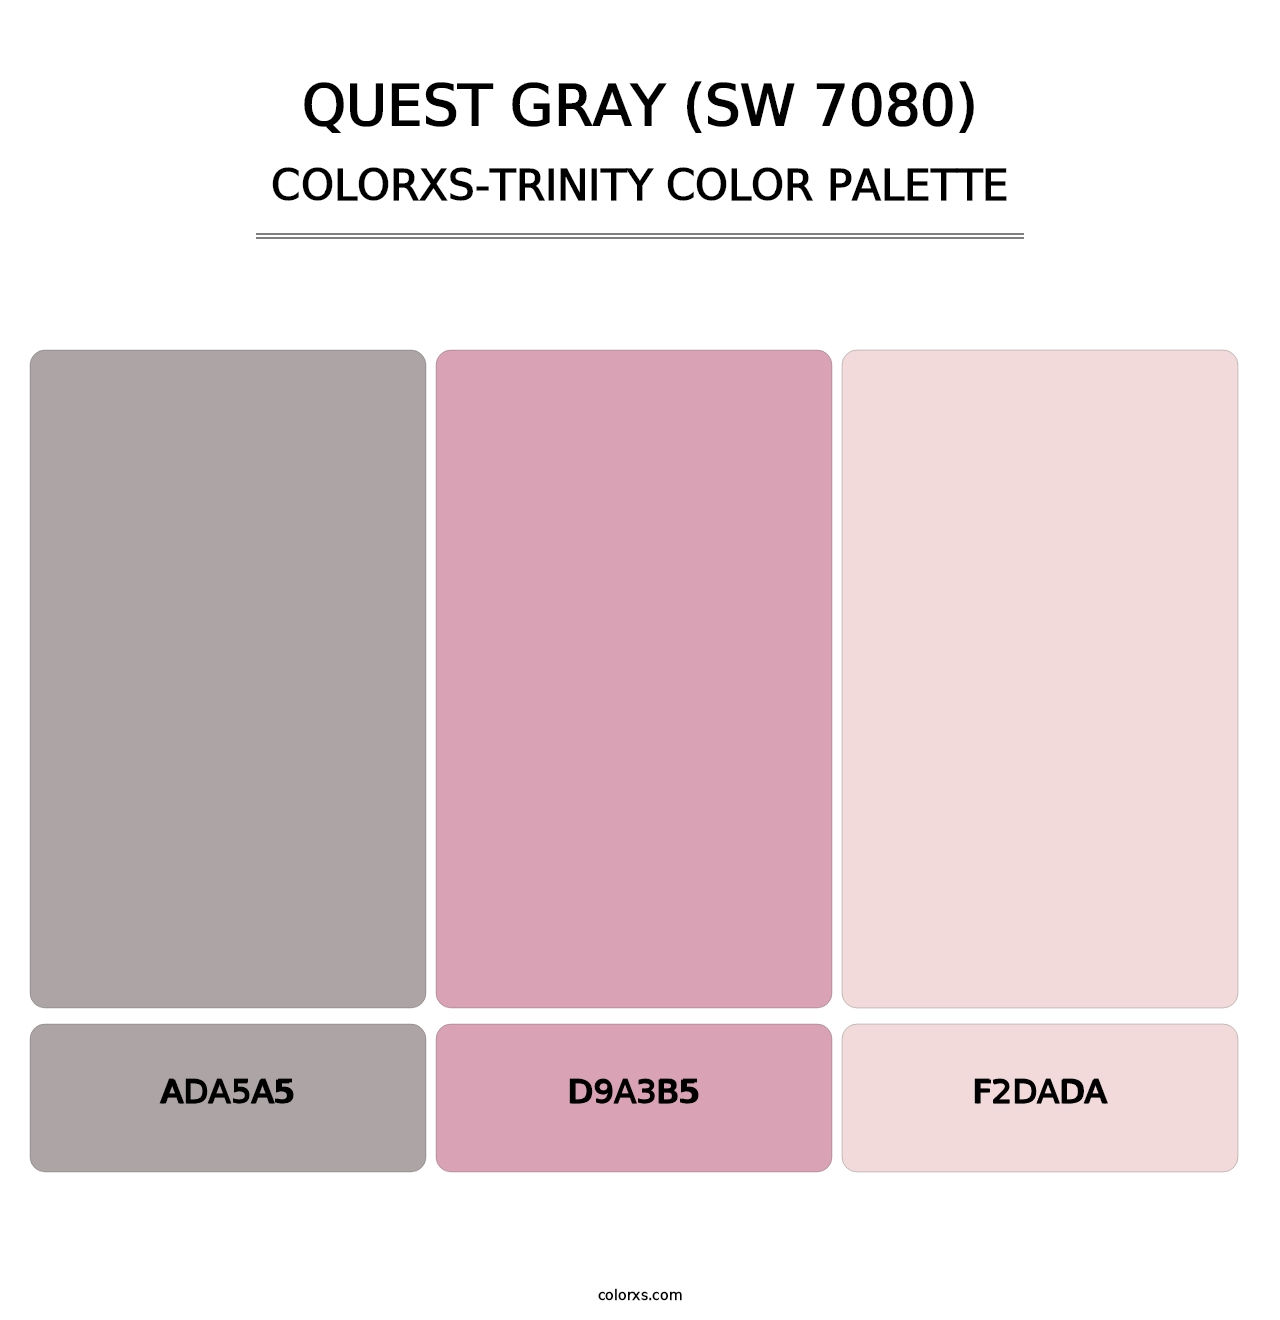 Quest Gray (SW 7080) - Colorxs Trinity Palette